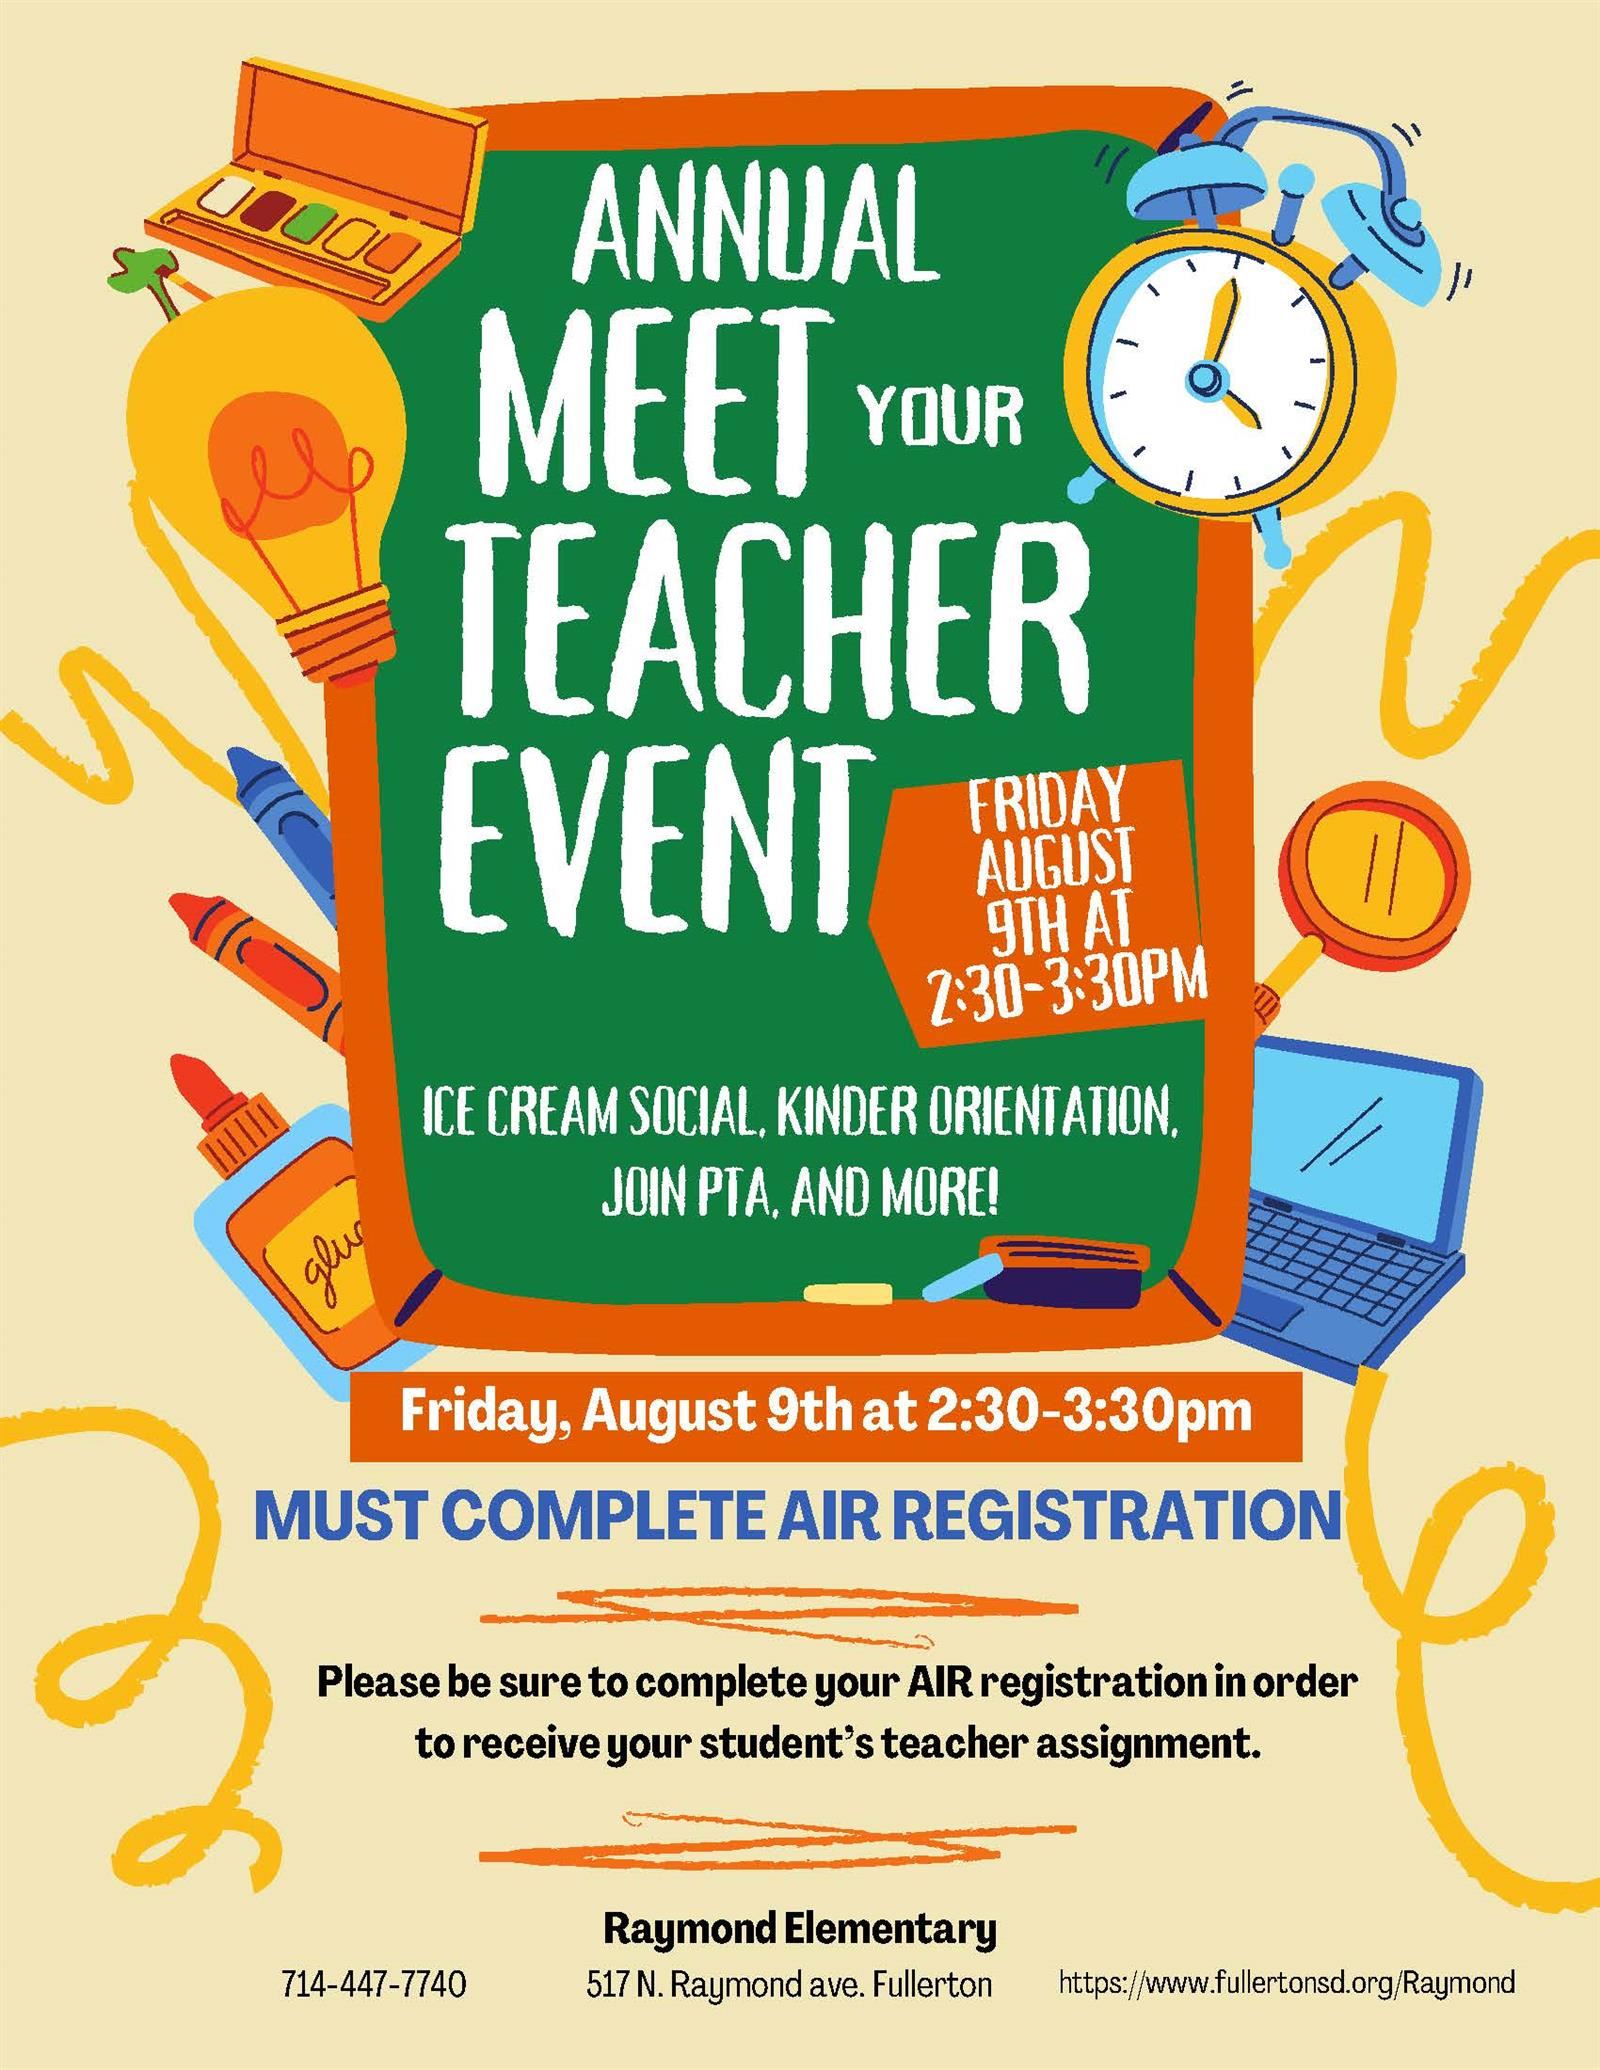  Annual Meet Your Teacher Event